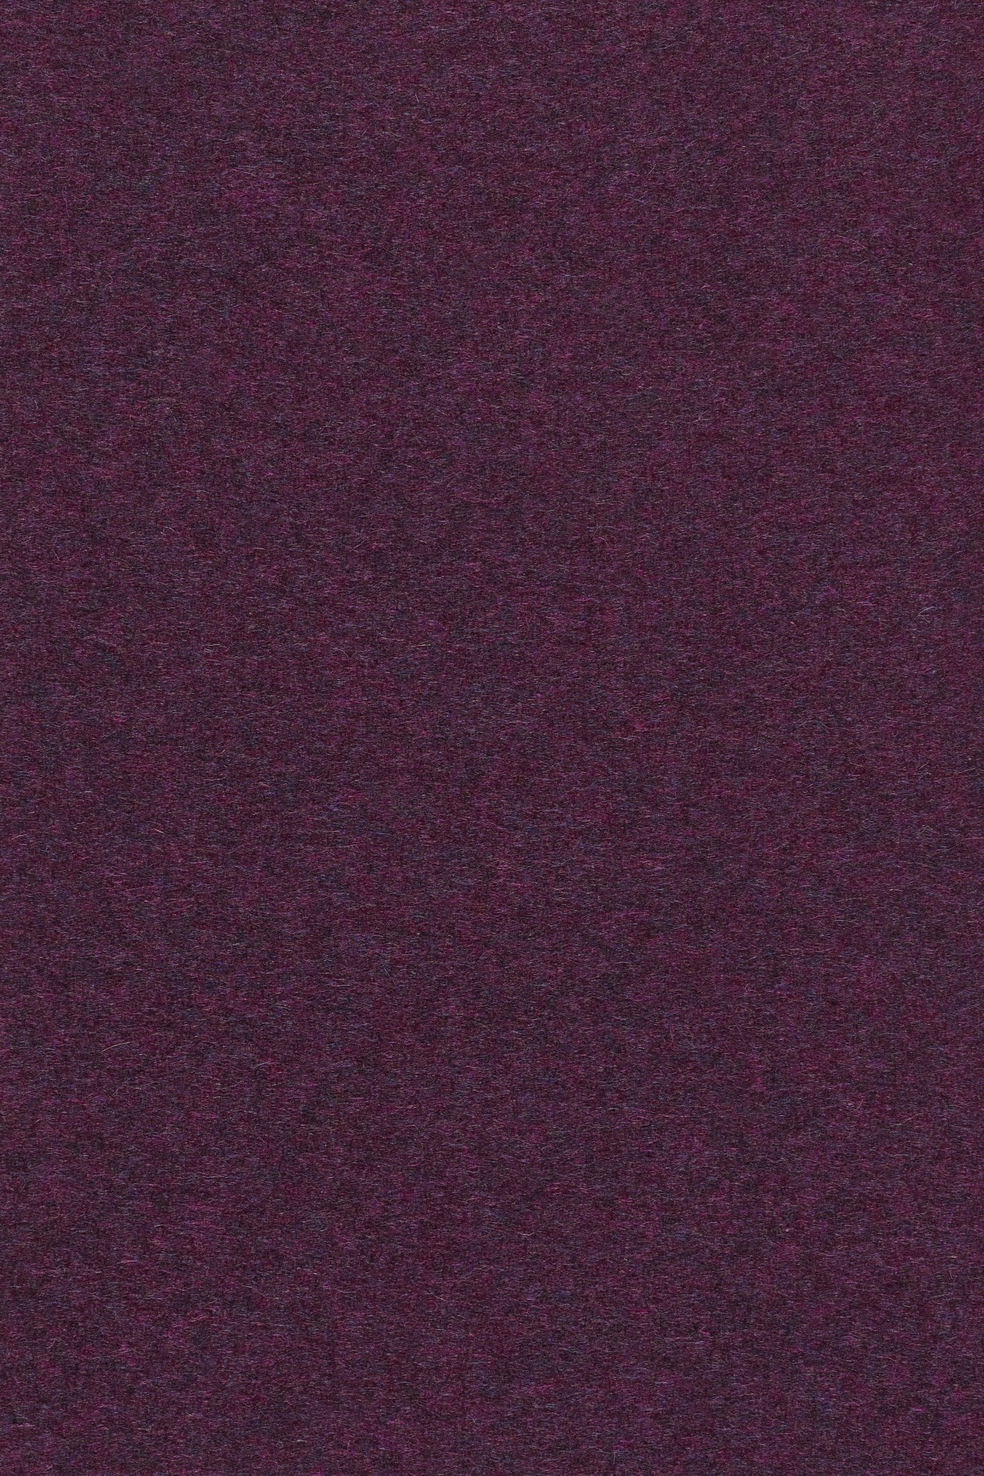 Fabric sample Divina MD 683 purple